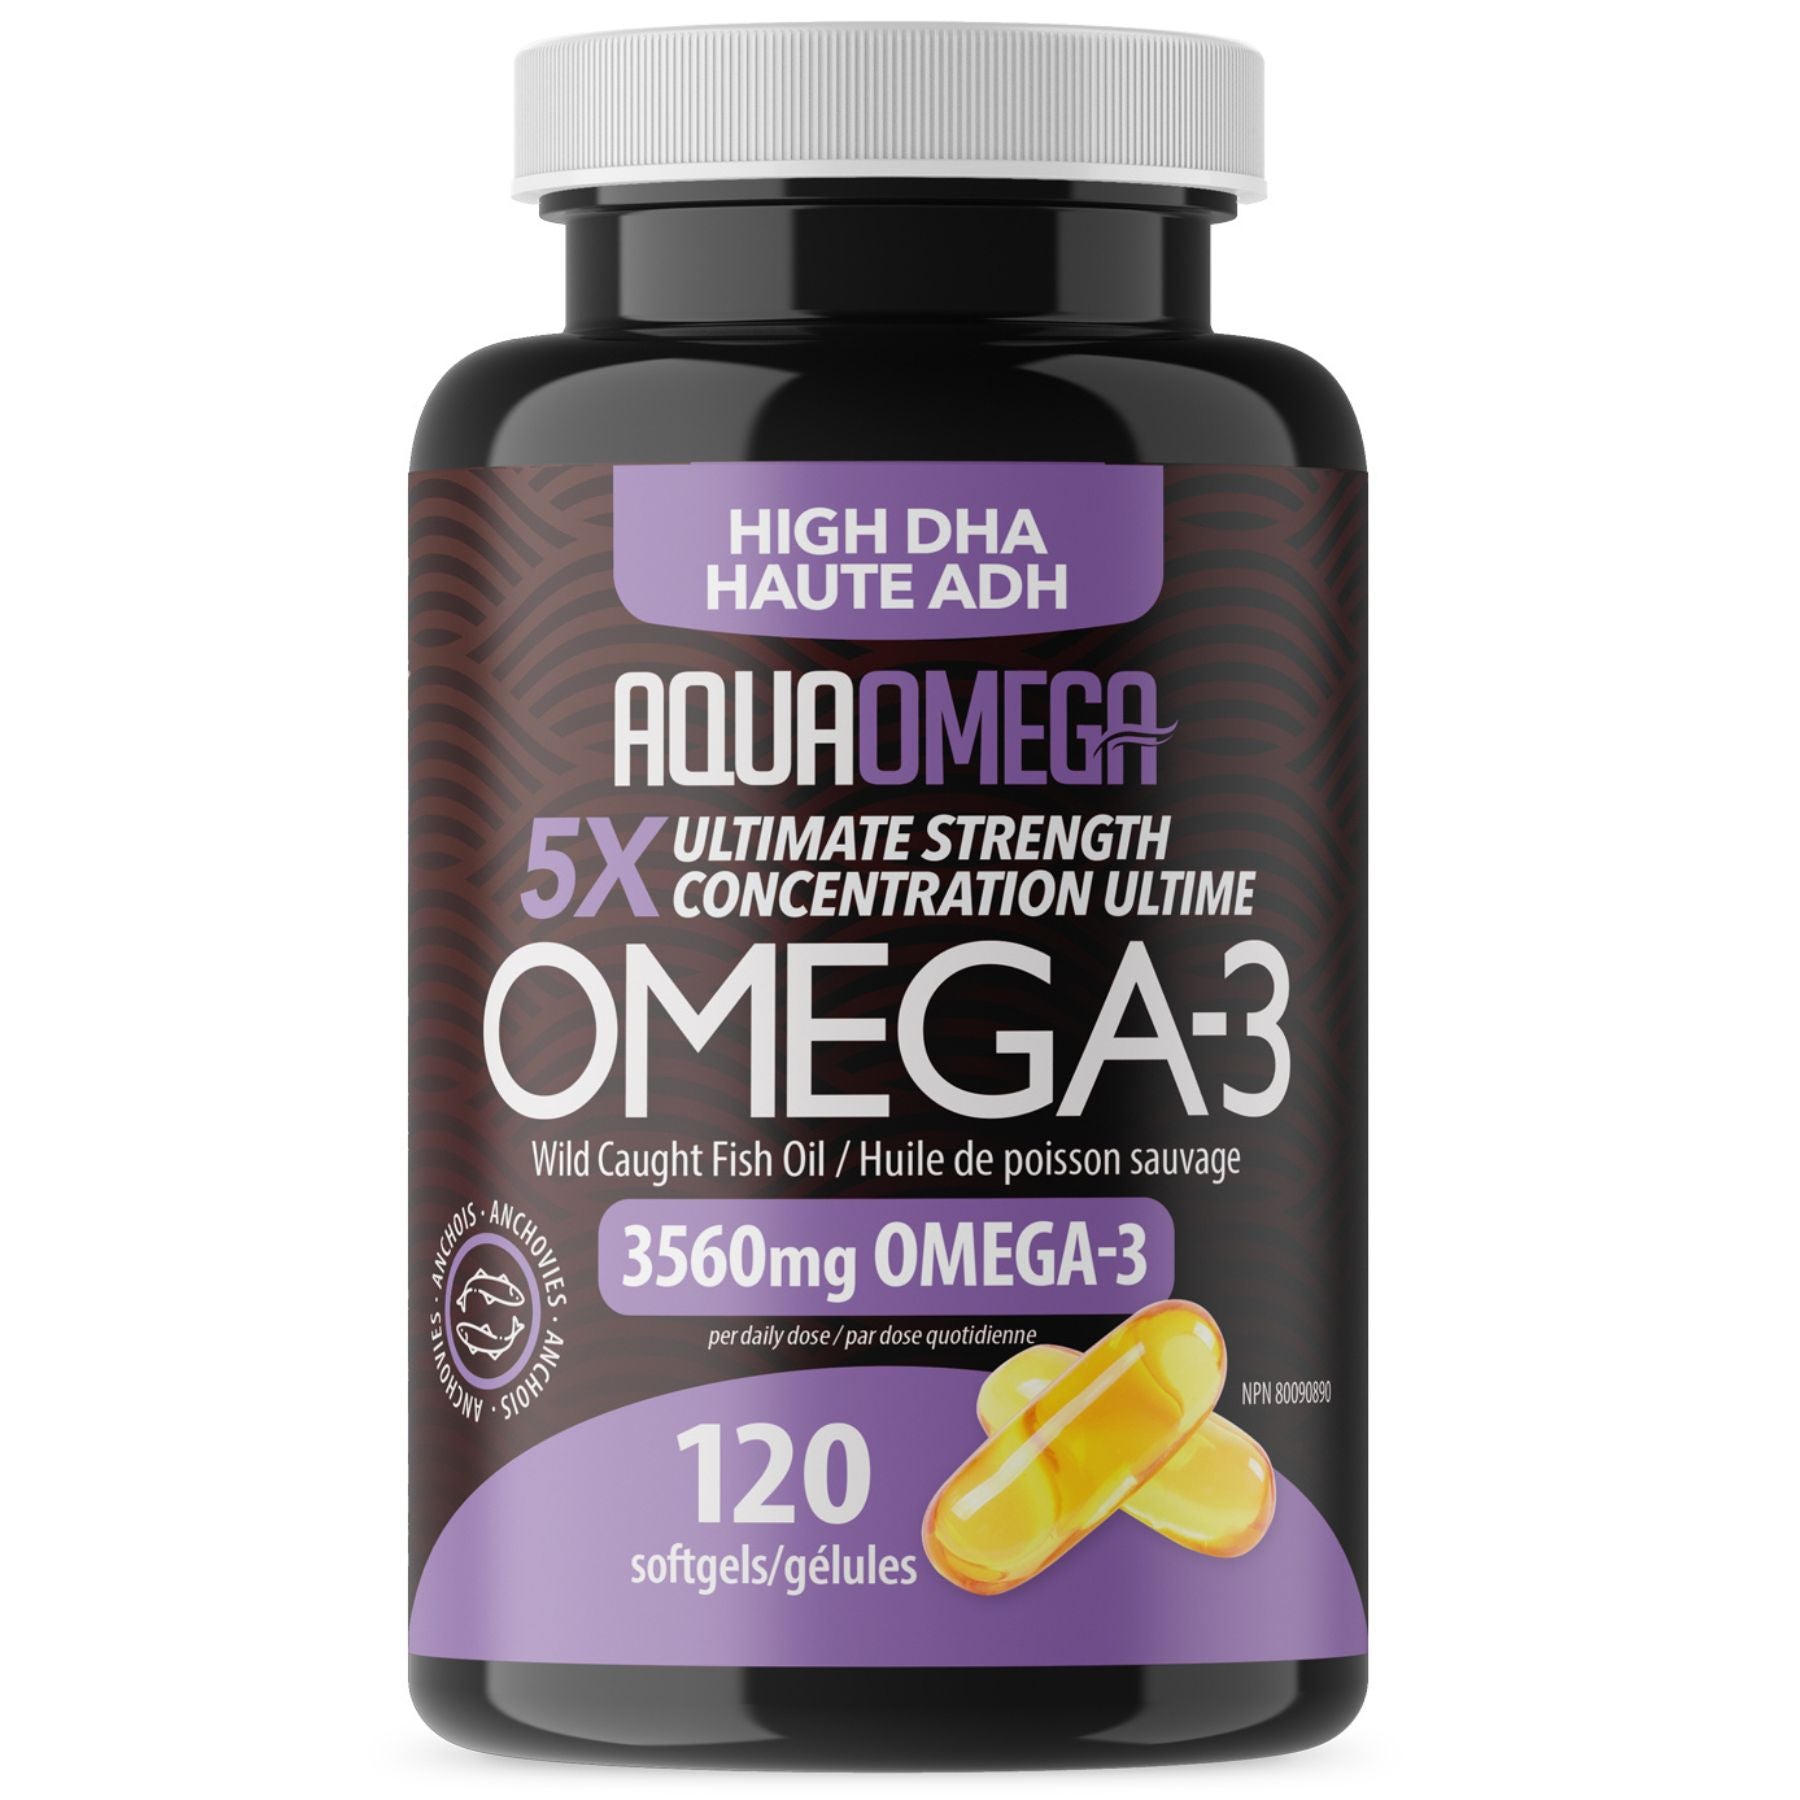 AquaOmega Omega-3 High DHA 120s